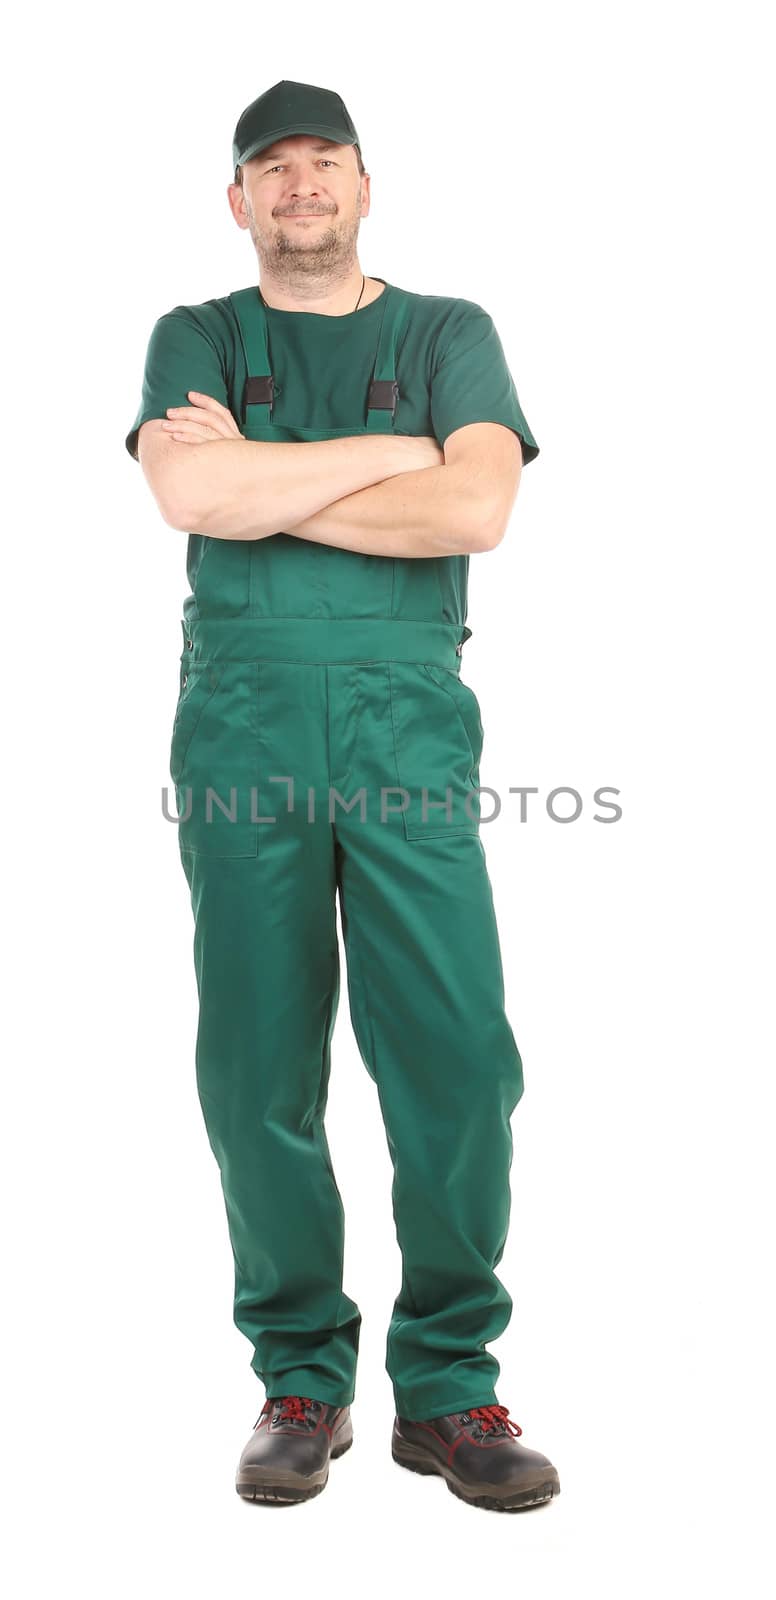 Man in green uniform. by indigolotos